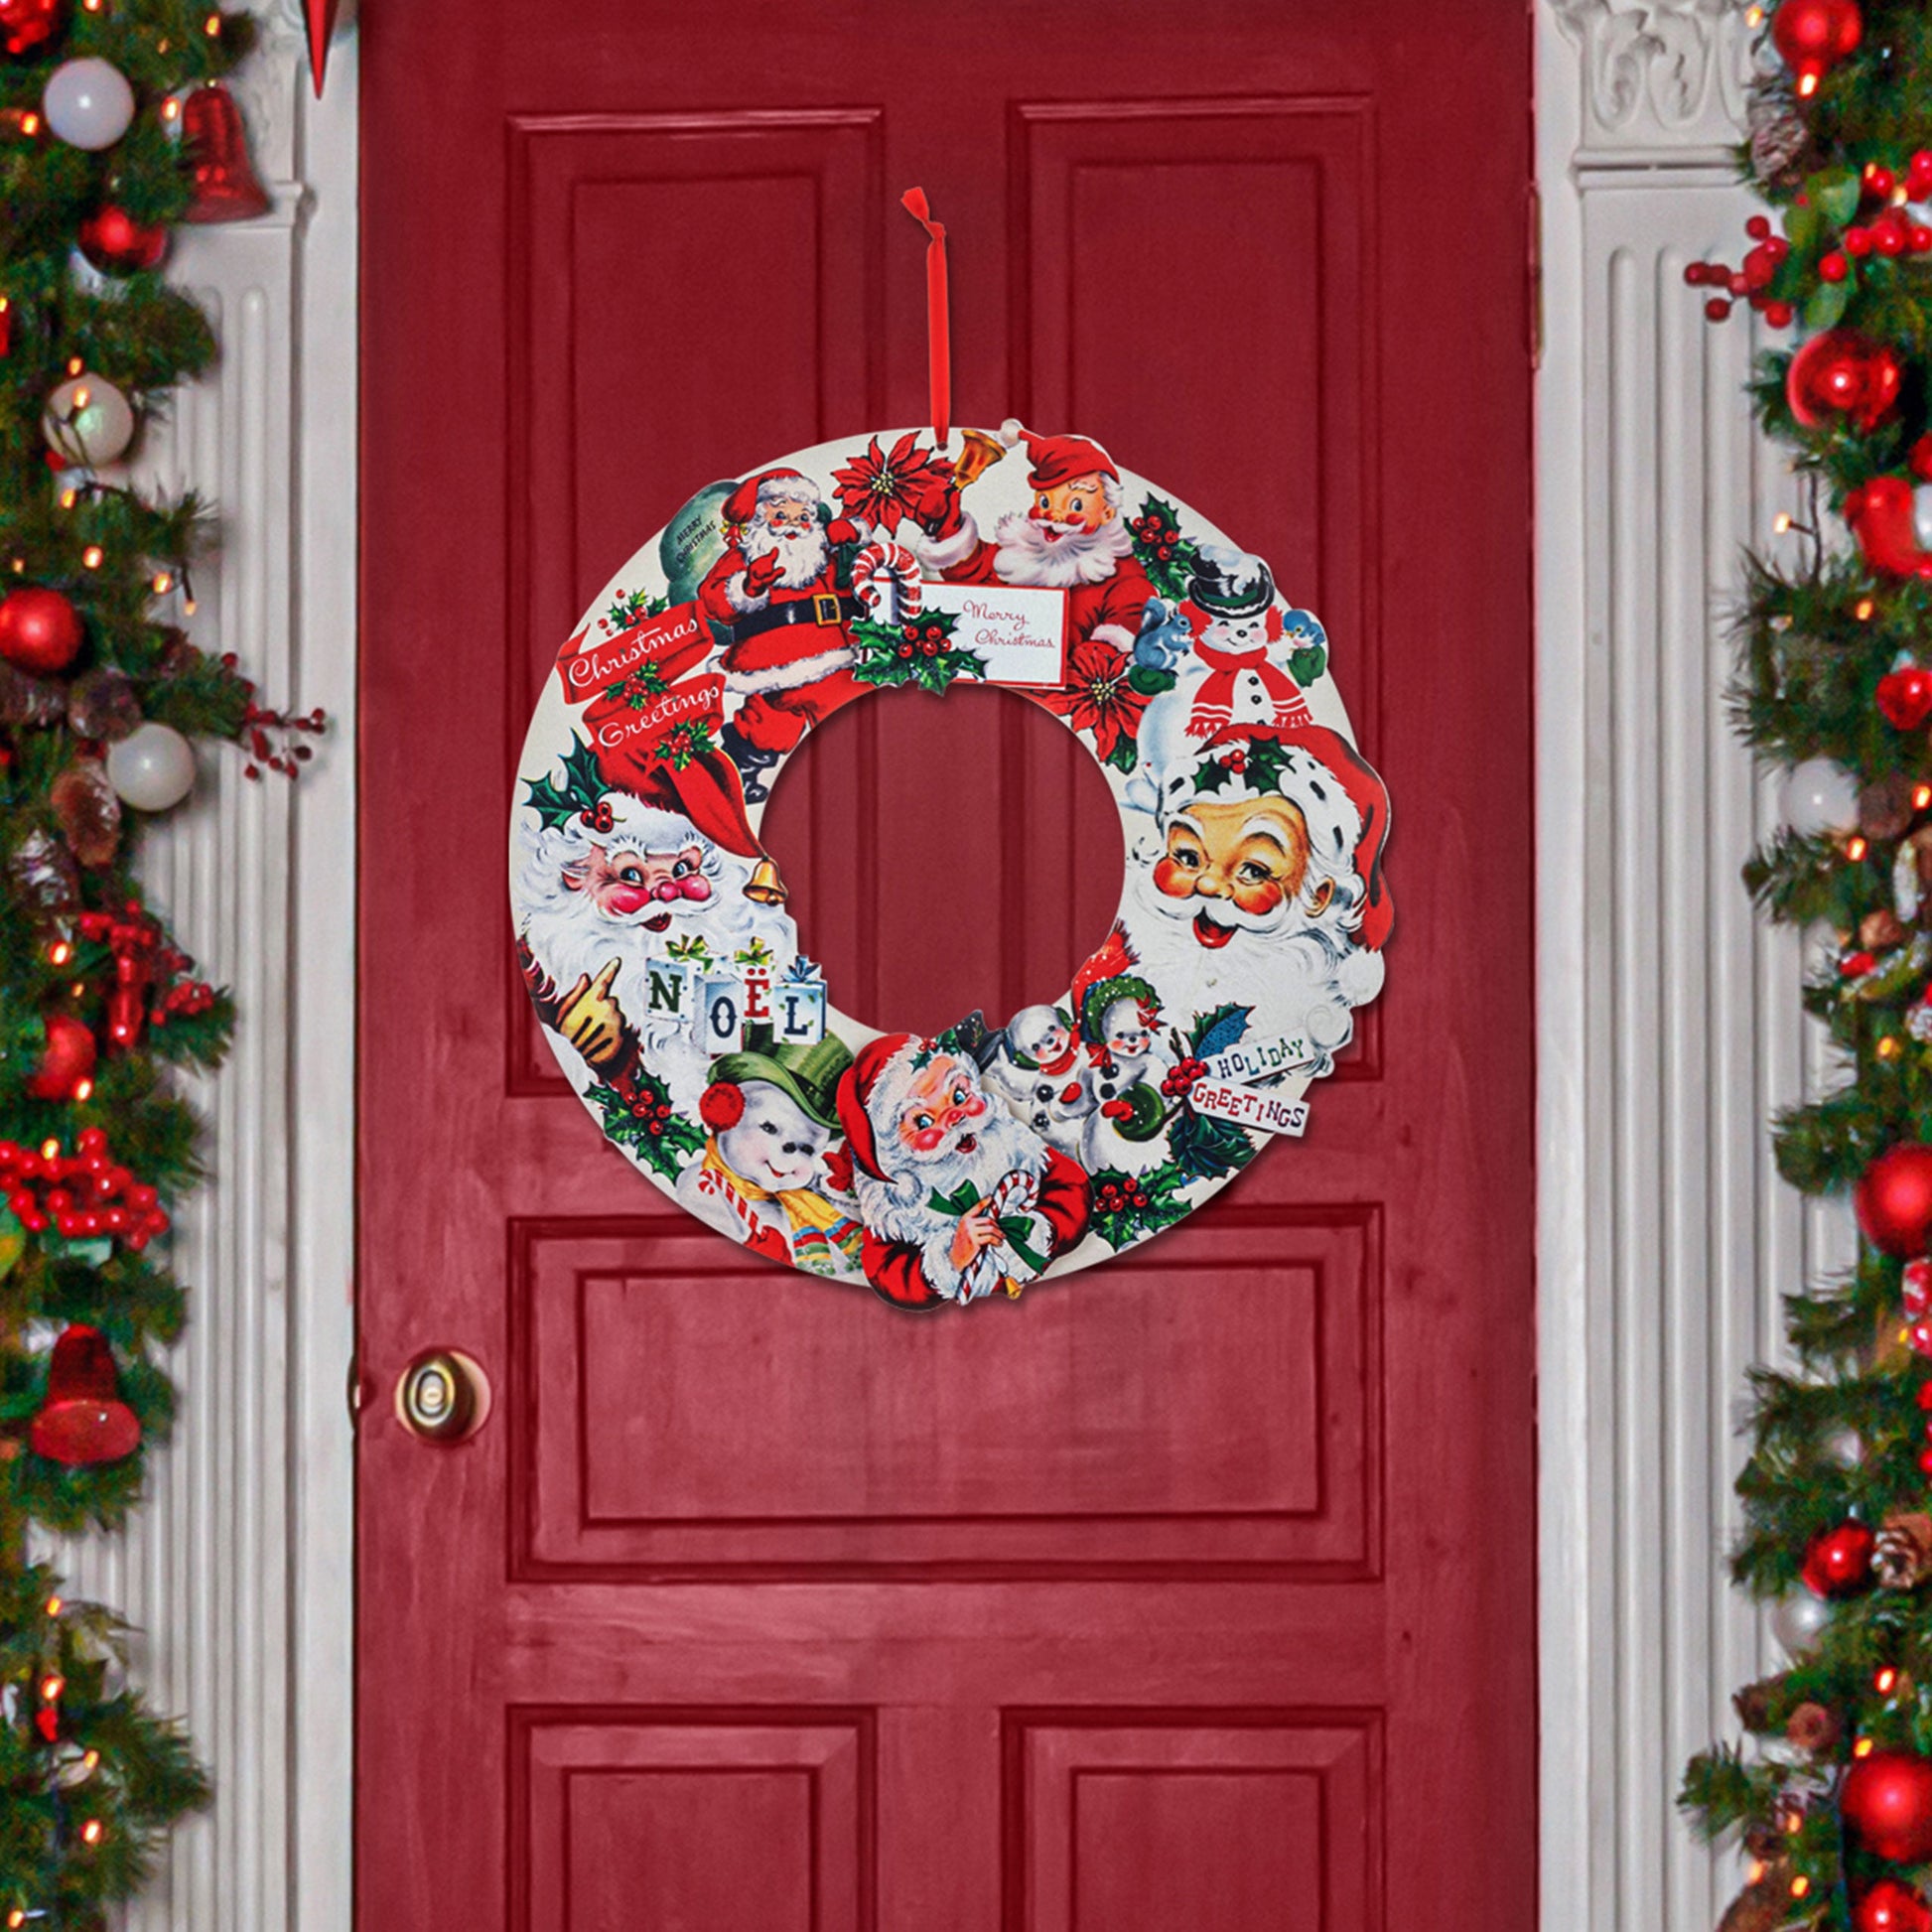 18" Wooden Wreath - Vintage Santa Claus - Mr. Christmas